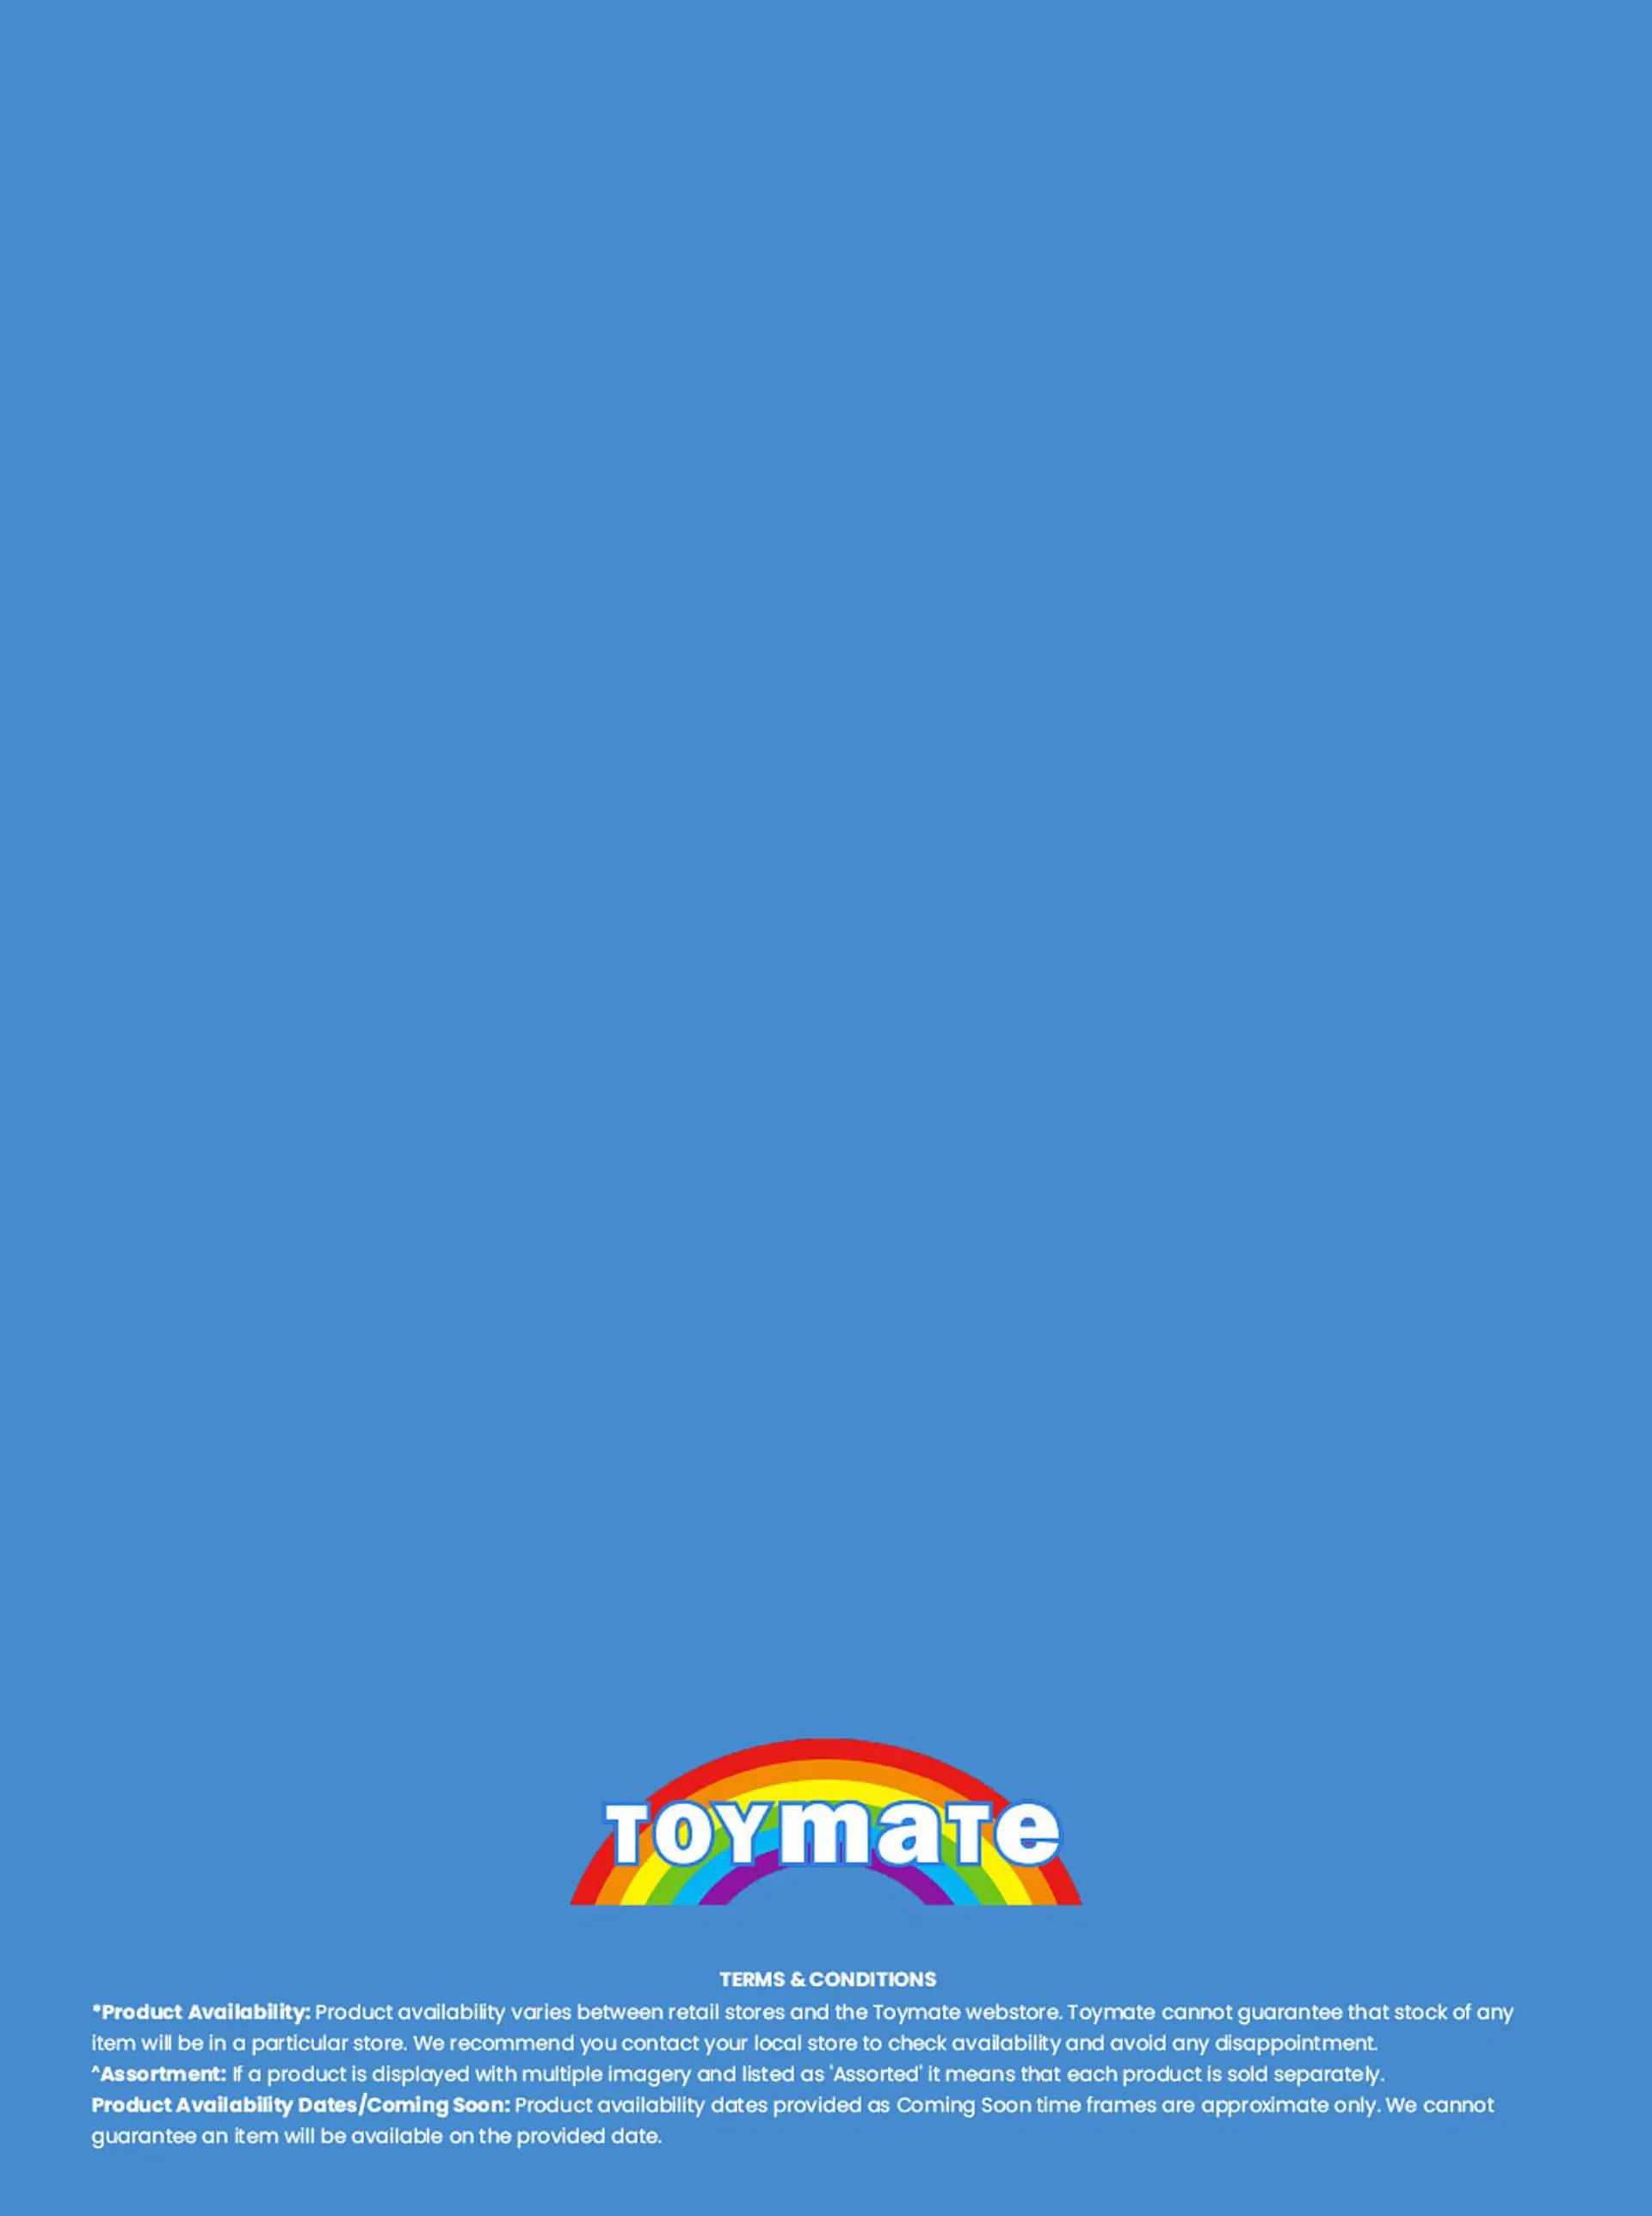 Toymate catalogue - 504